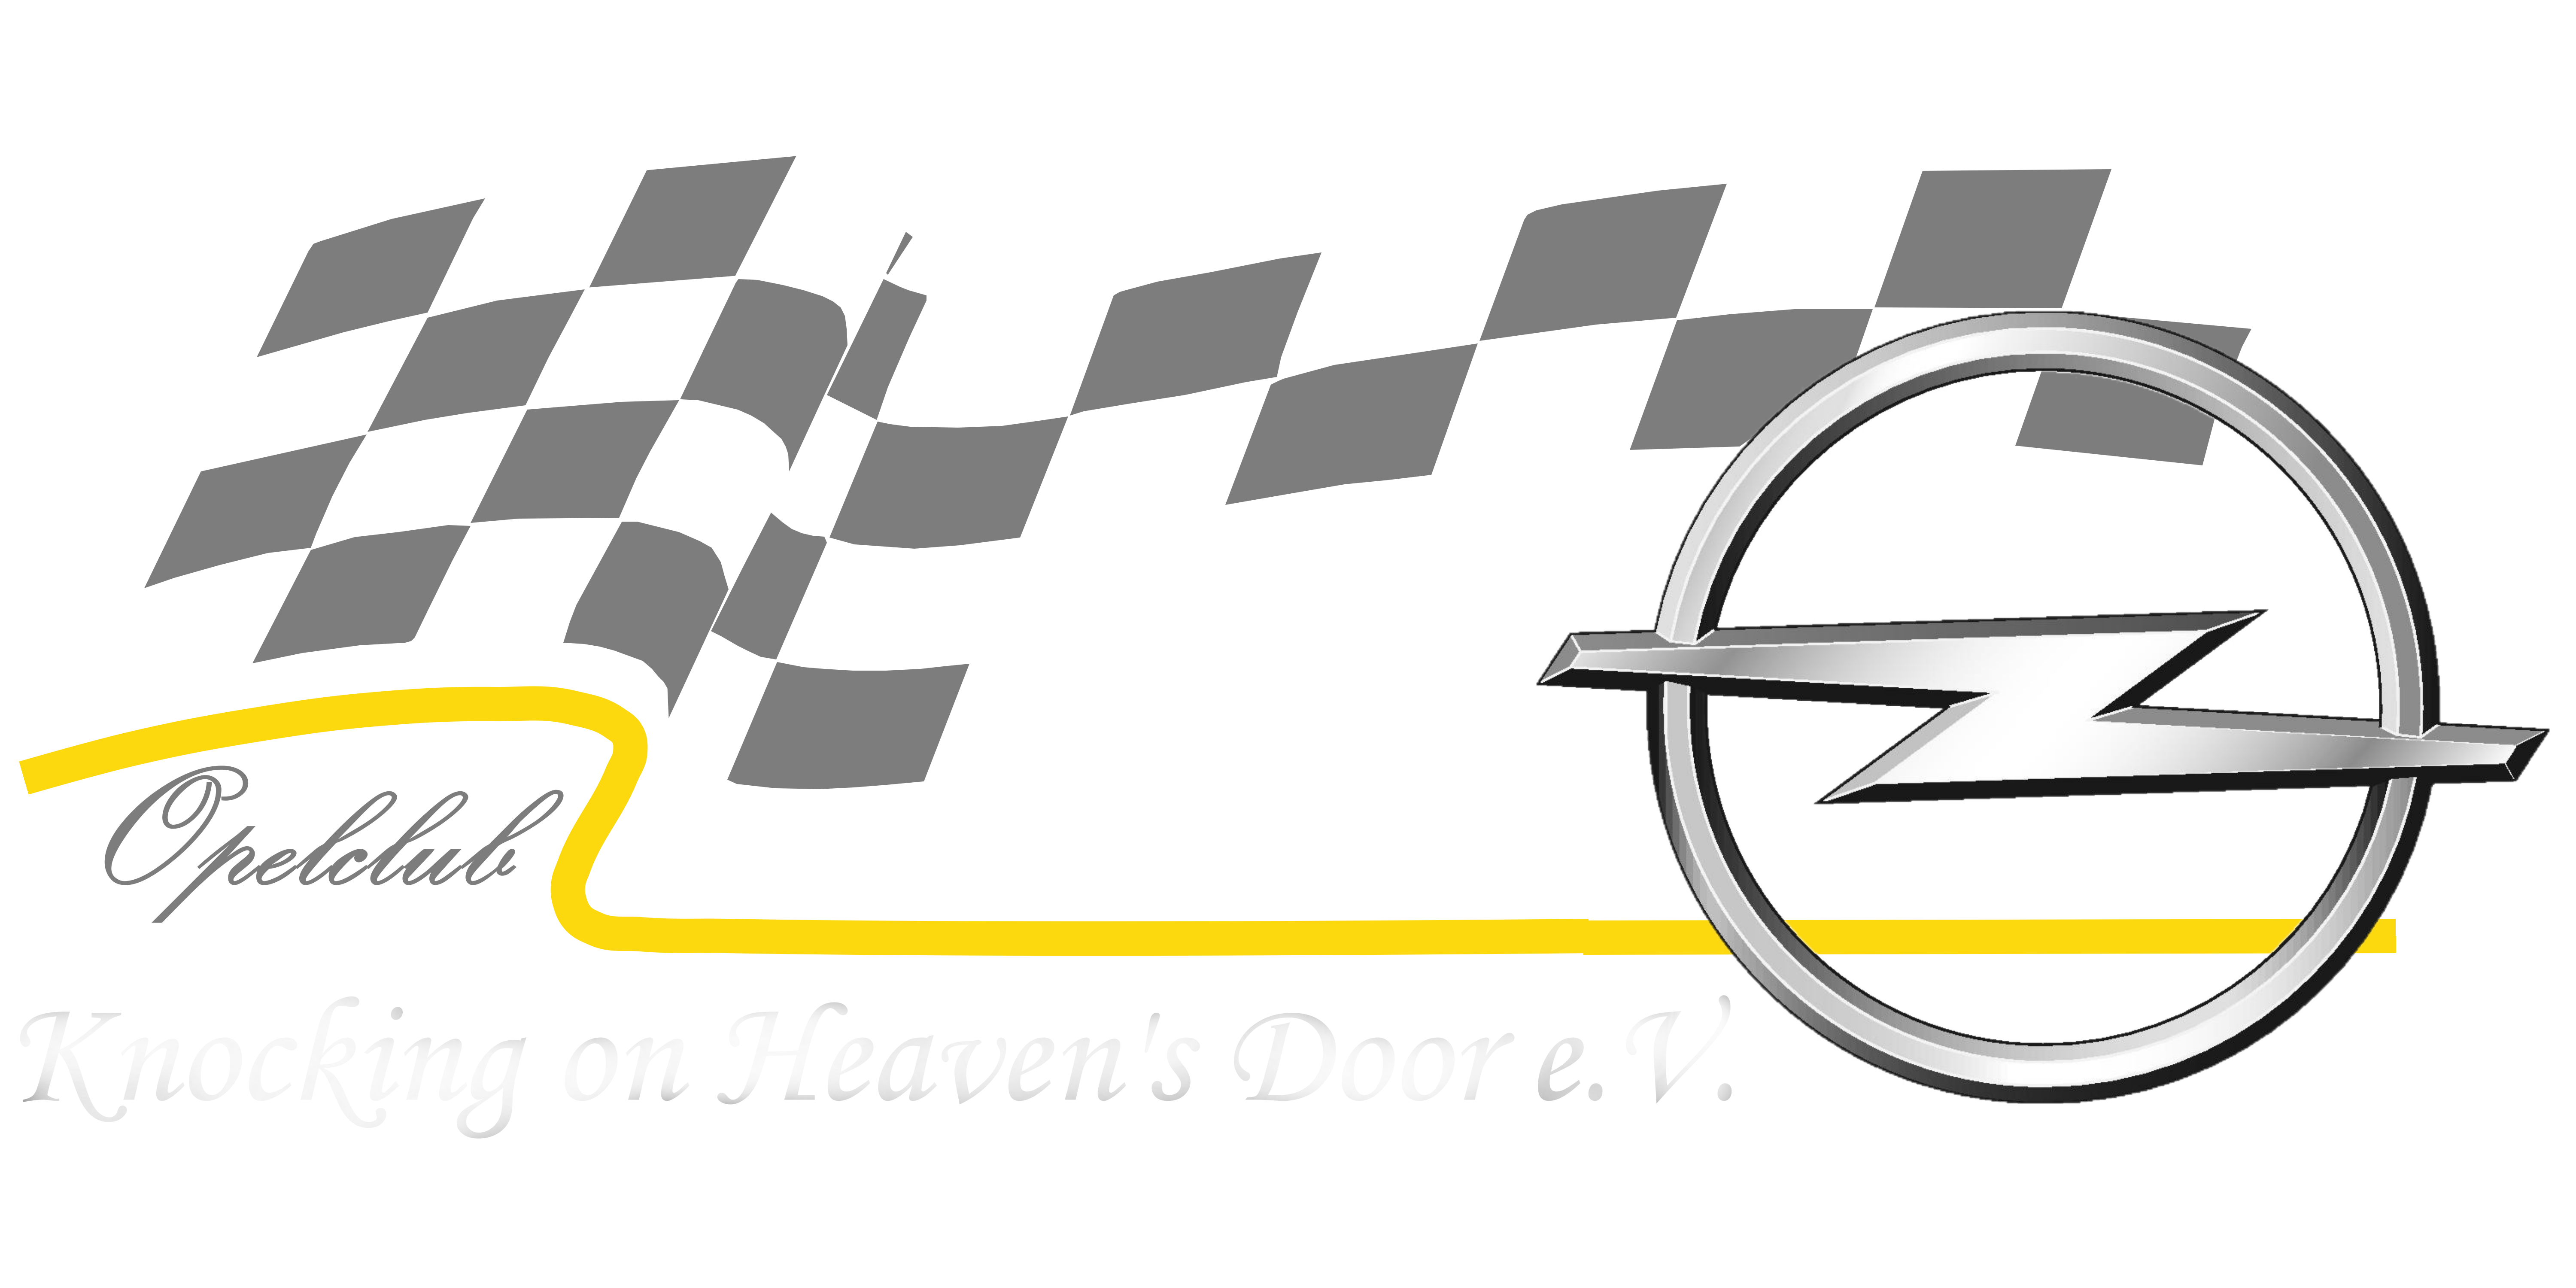 Opelclub - Knocking on Heaven's Door e.V.